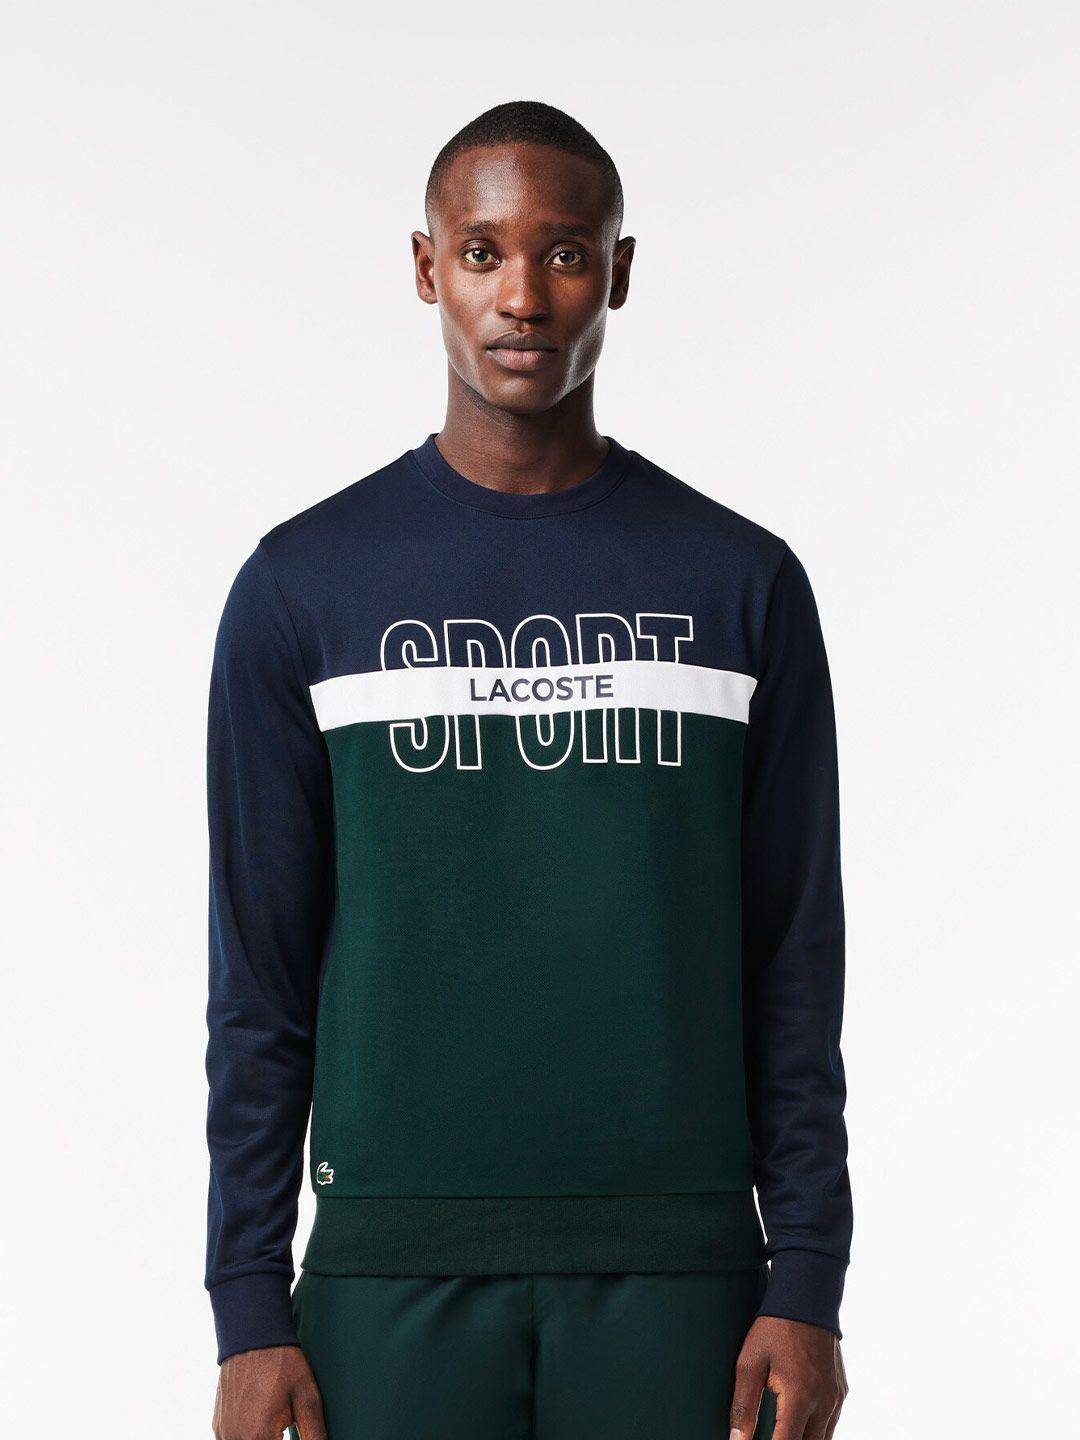 lacoste typography printed pullover sweatshirt